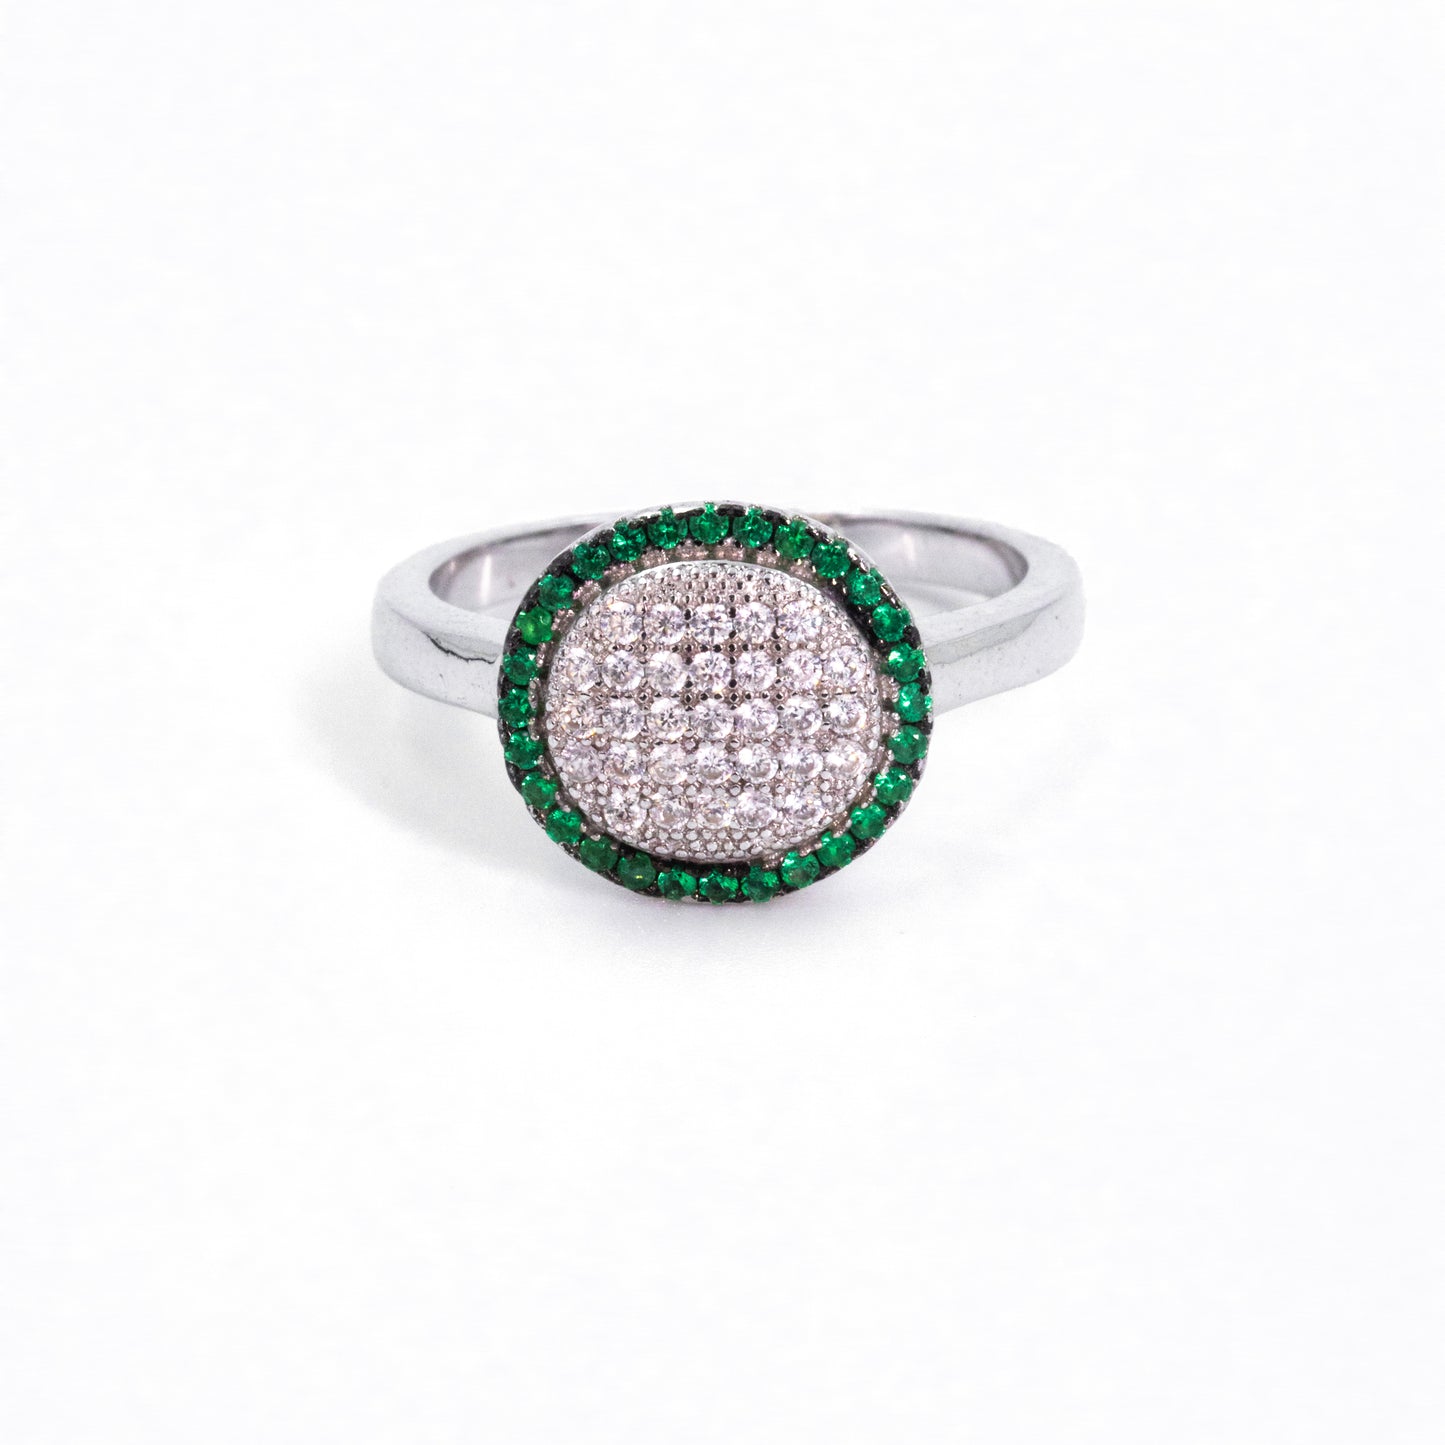 Silver Green Crystal Ring